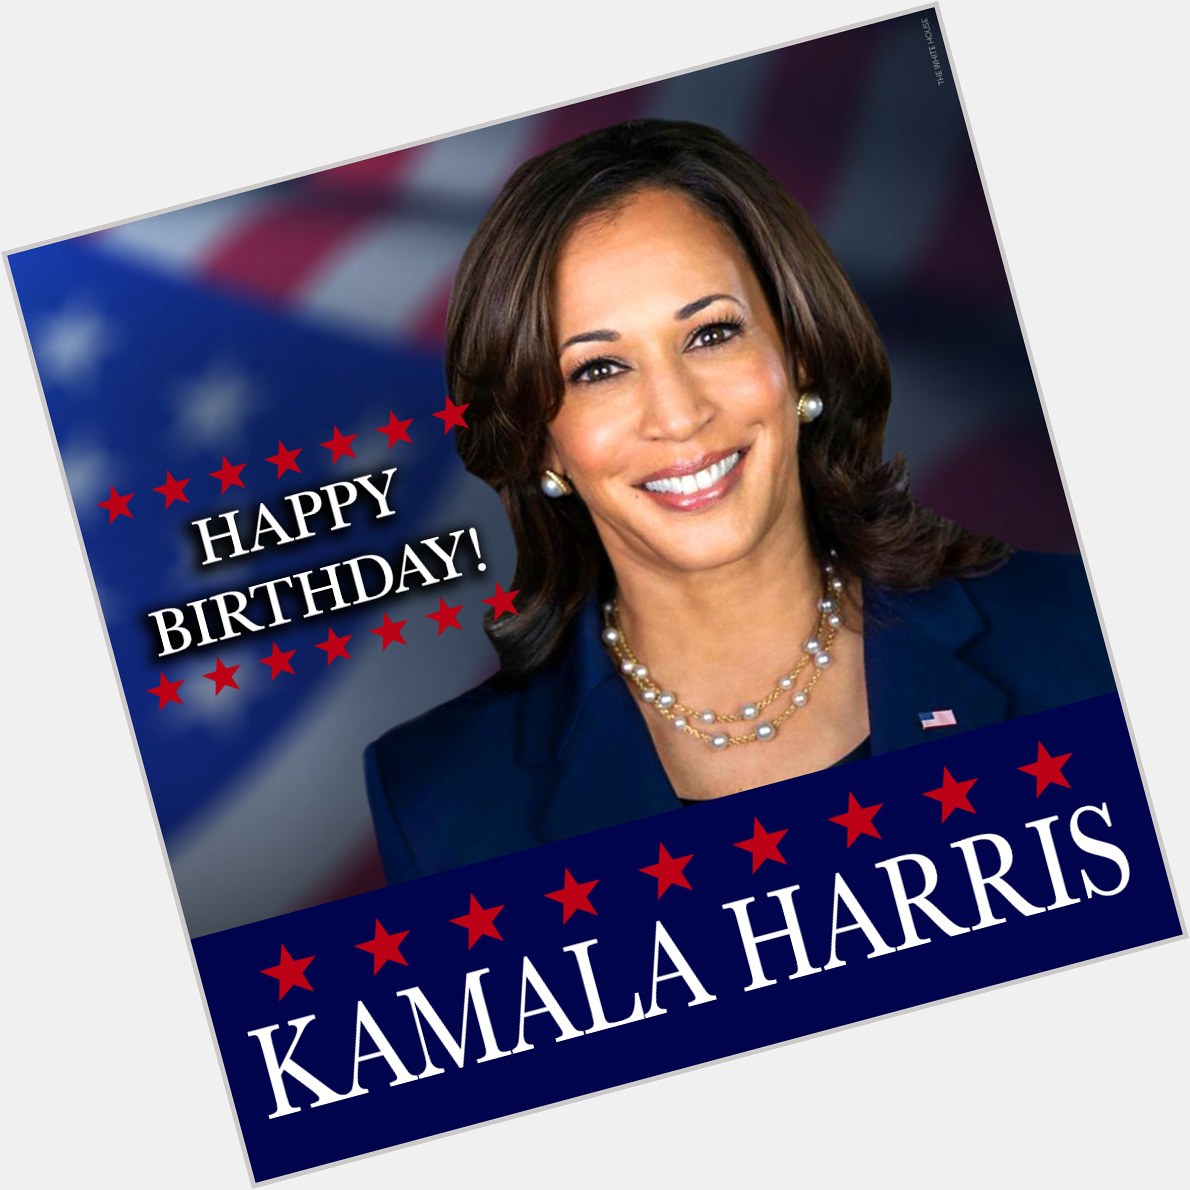 Happy birthday! Vice President Kamala Harris turns 58 years old today. 